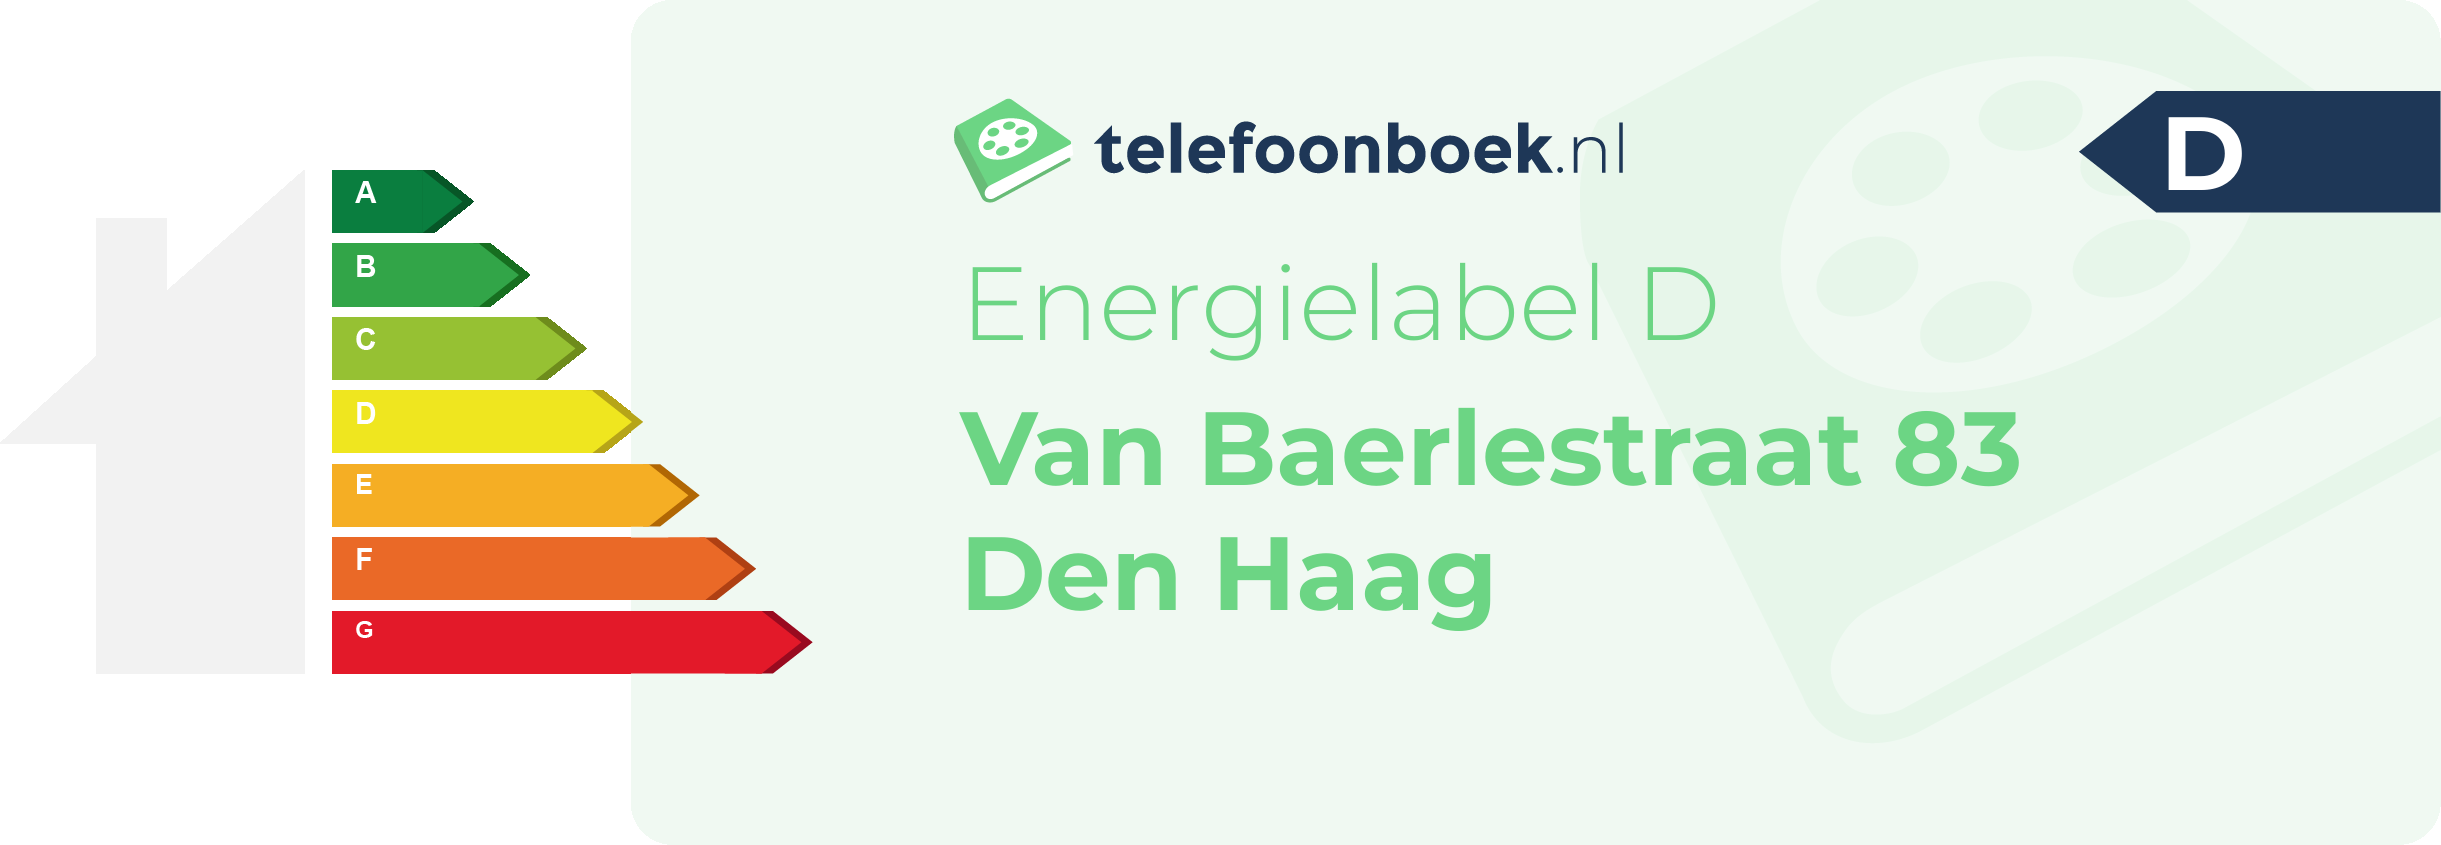 Energielabel Van Baerlestraat 83 Den Haag